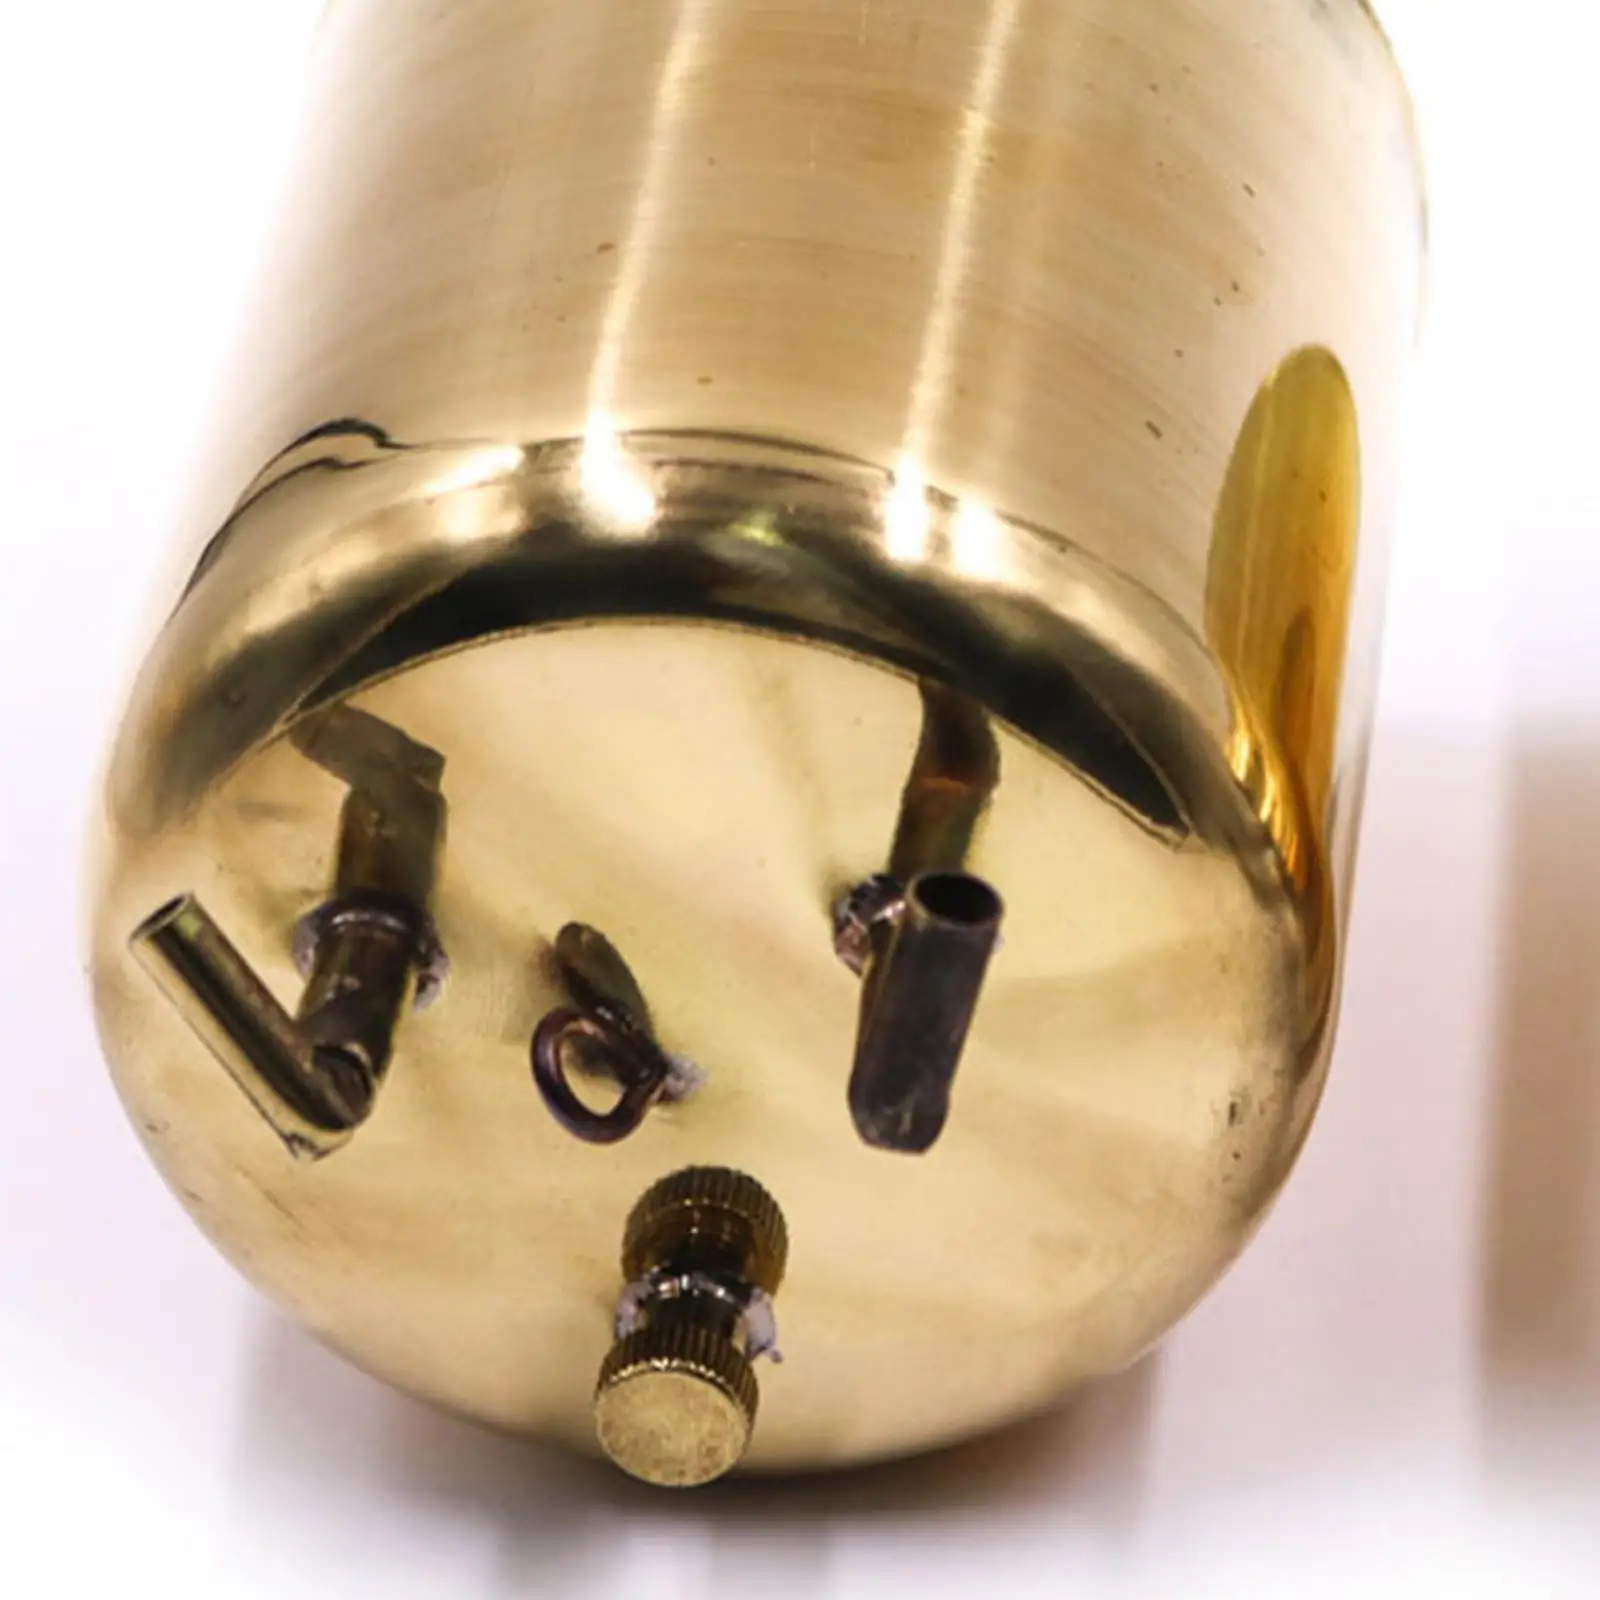 Copper Oiler Replaces  Install Height 175mm Diameter 110mm Bottle for Melting 